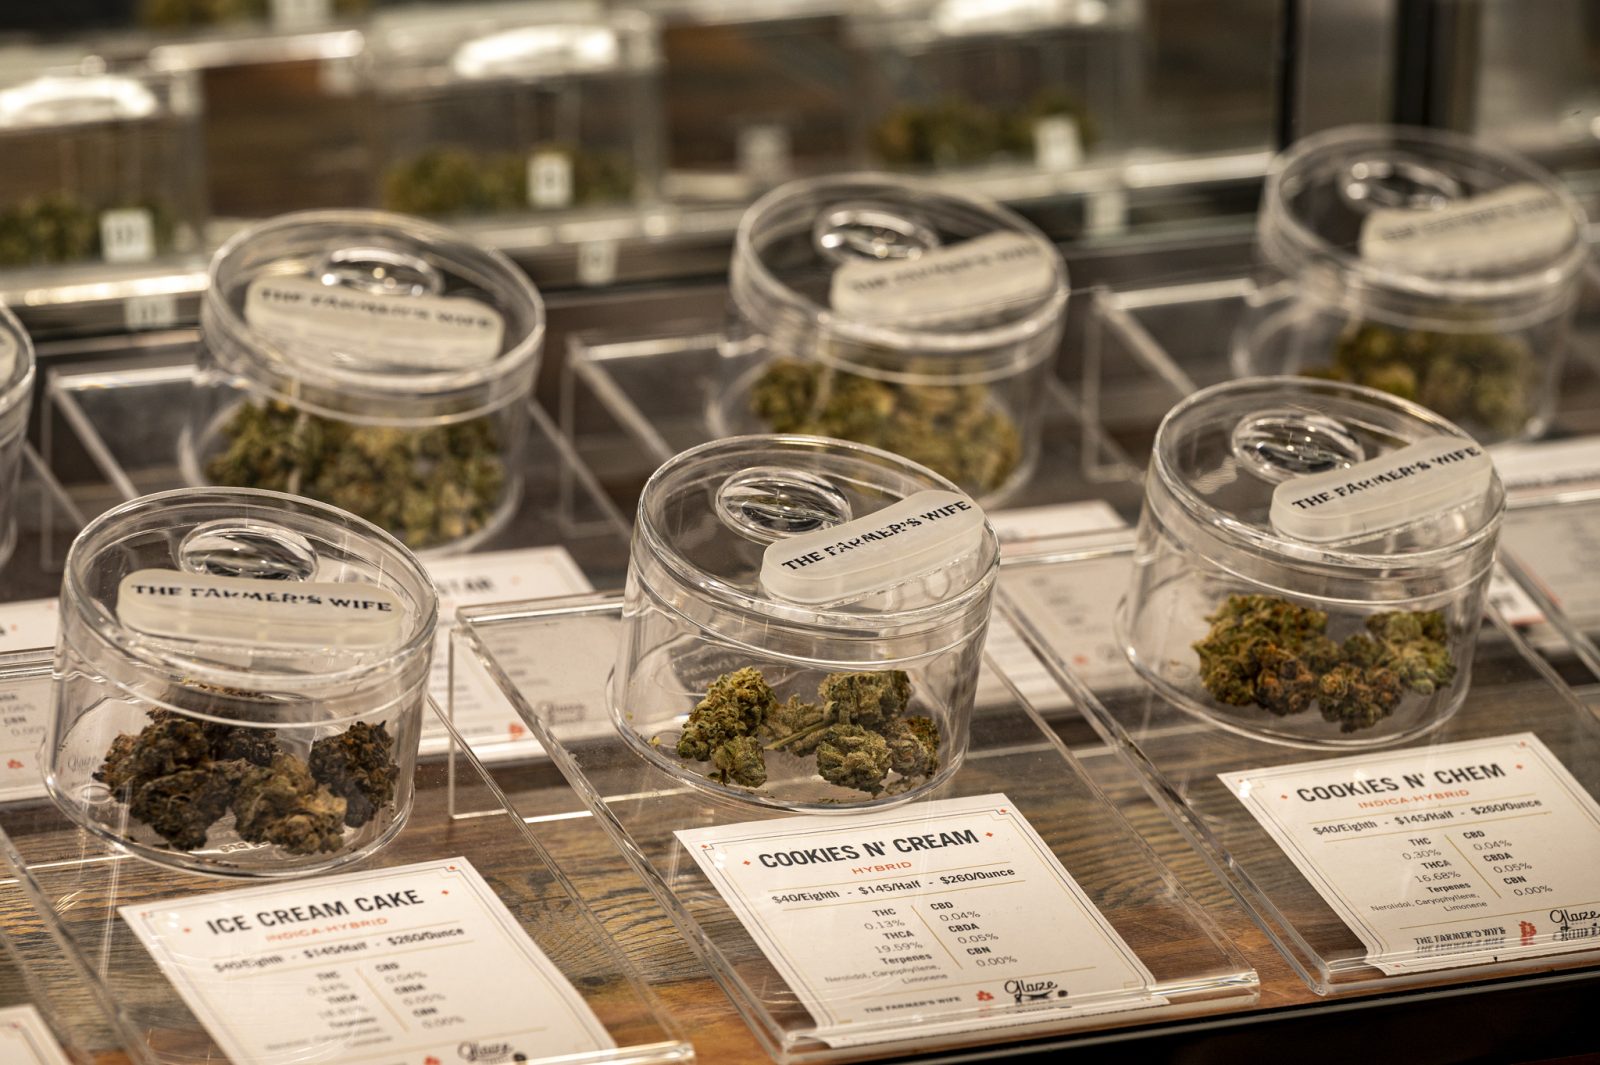 Legislators say Missouri cannabis regulator overstepped authority on packaging guidance